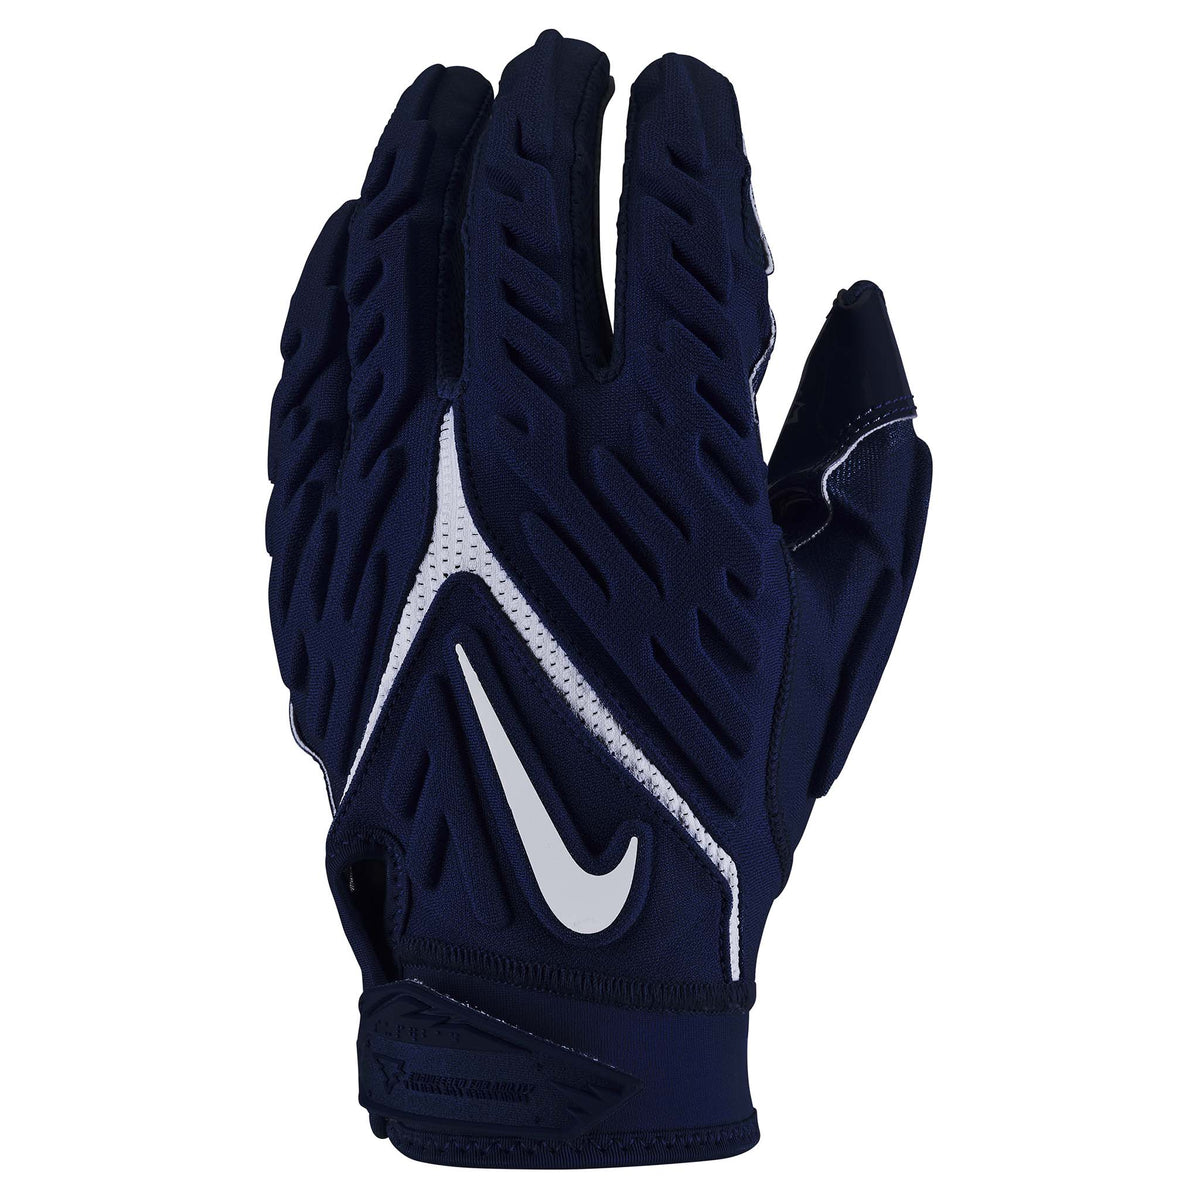 Nike Superbad 6.0 gants de football americain pour adultes midnight navy